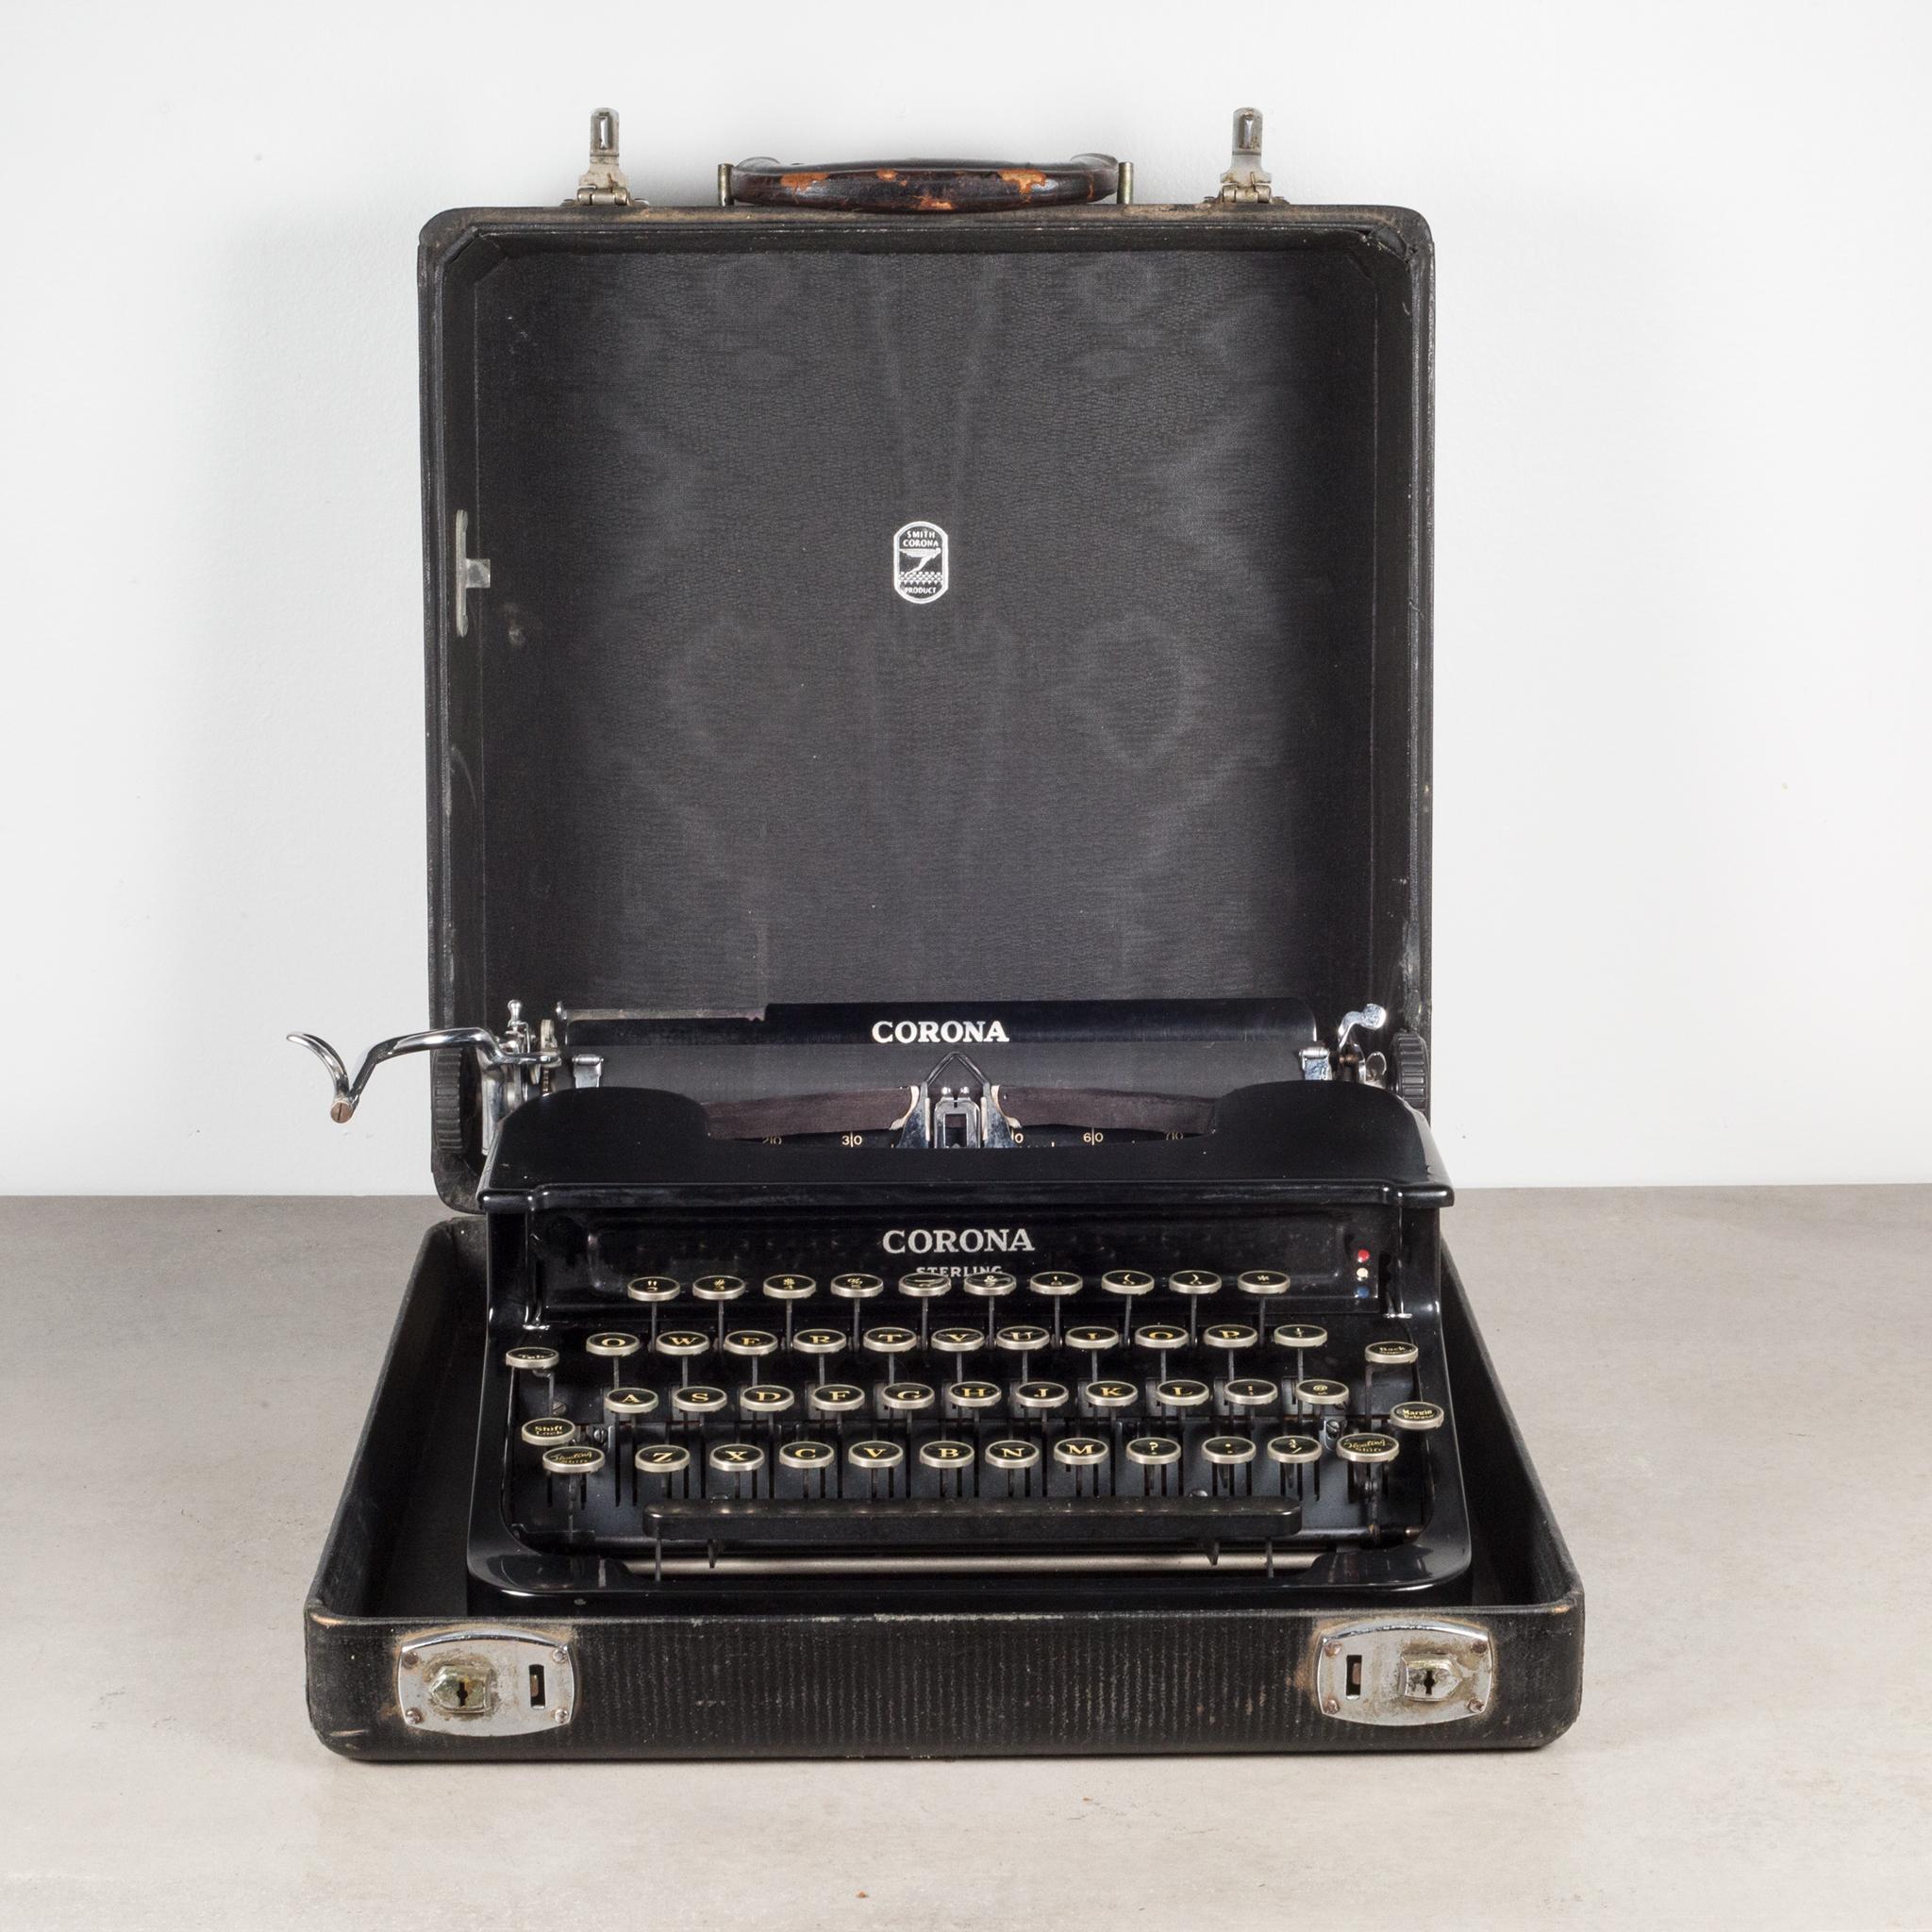 Industrial Fully Refurbished Corona Sterling Typewriter, c.1936